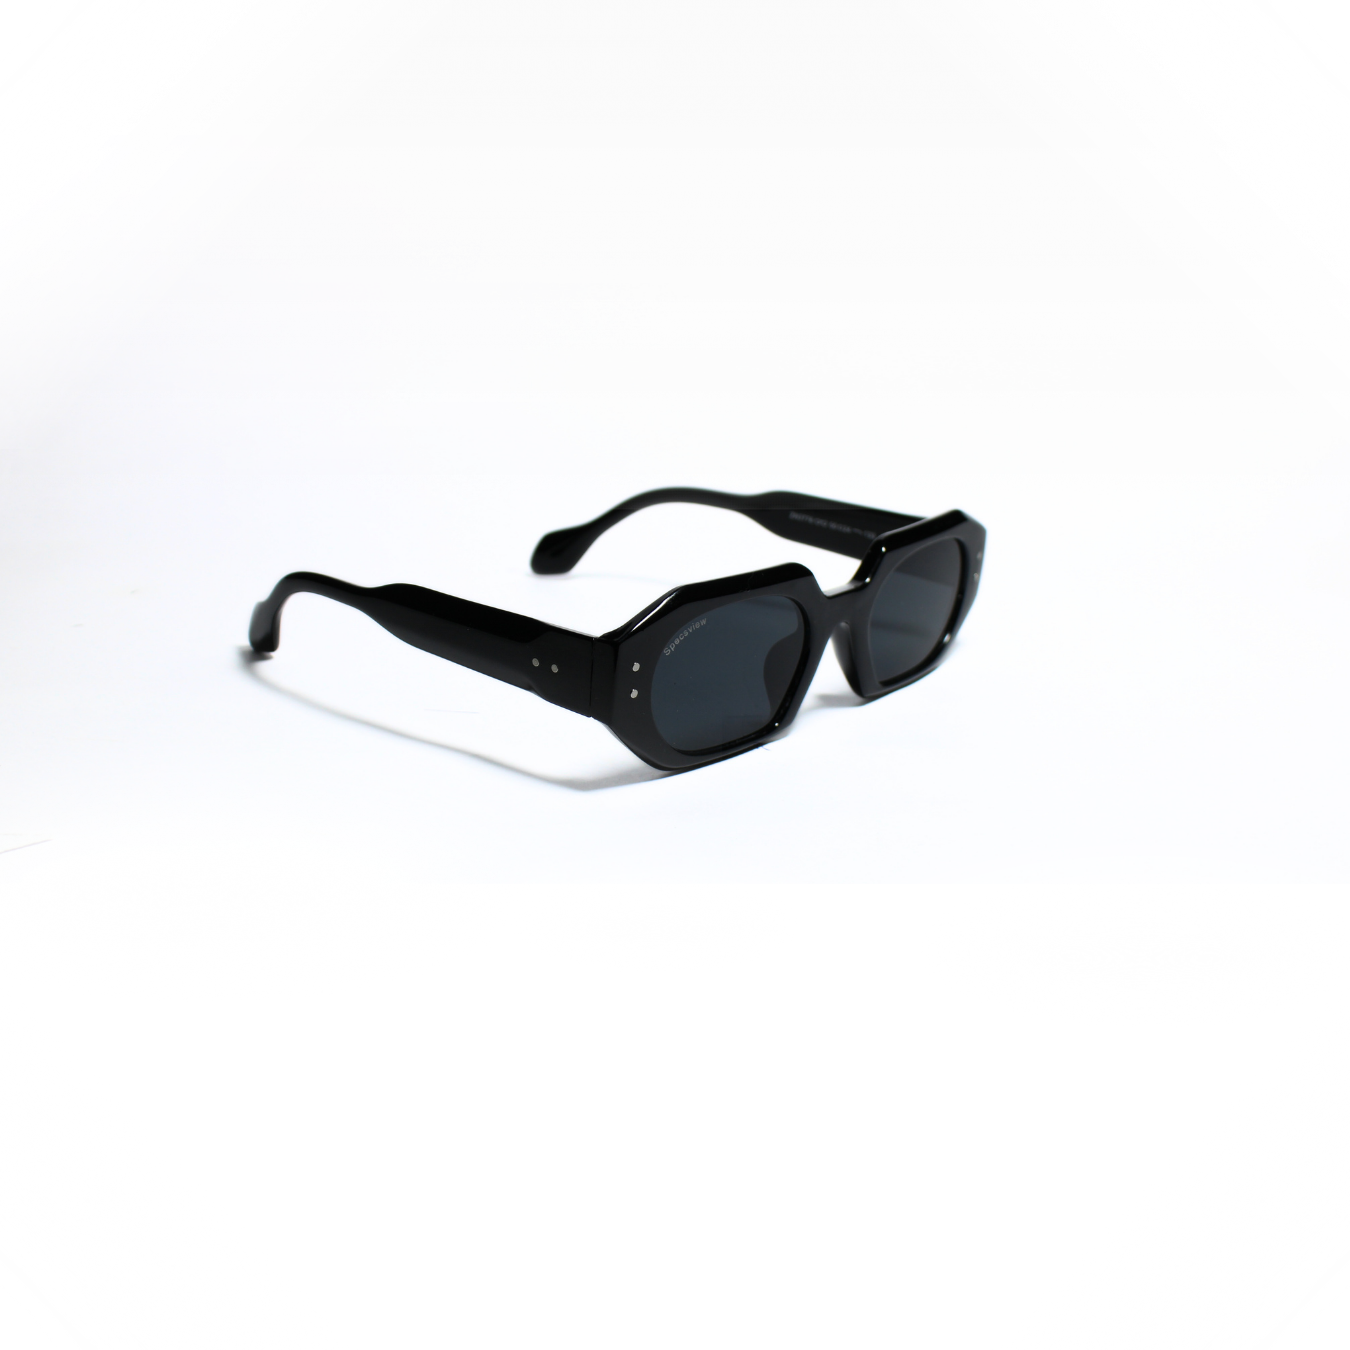 NOAH 001 I Sunglasses for Men and Women - Specsview